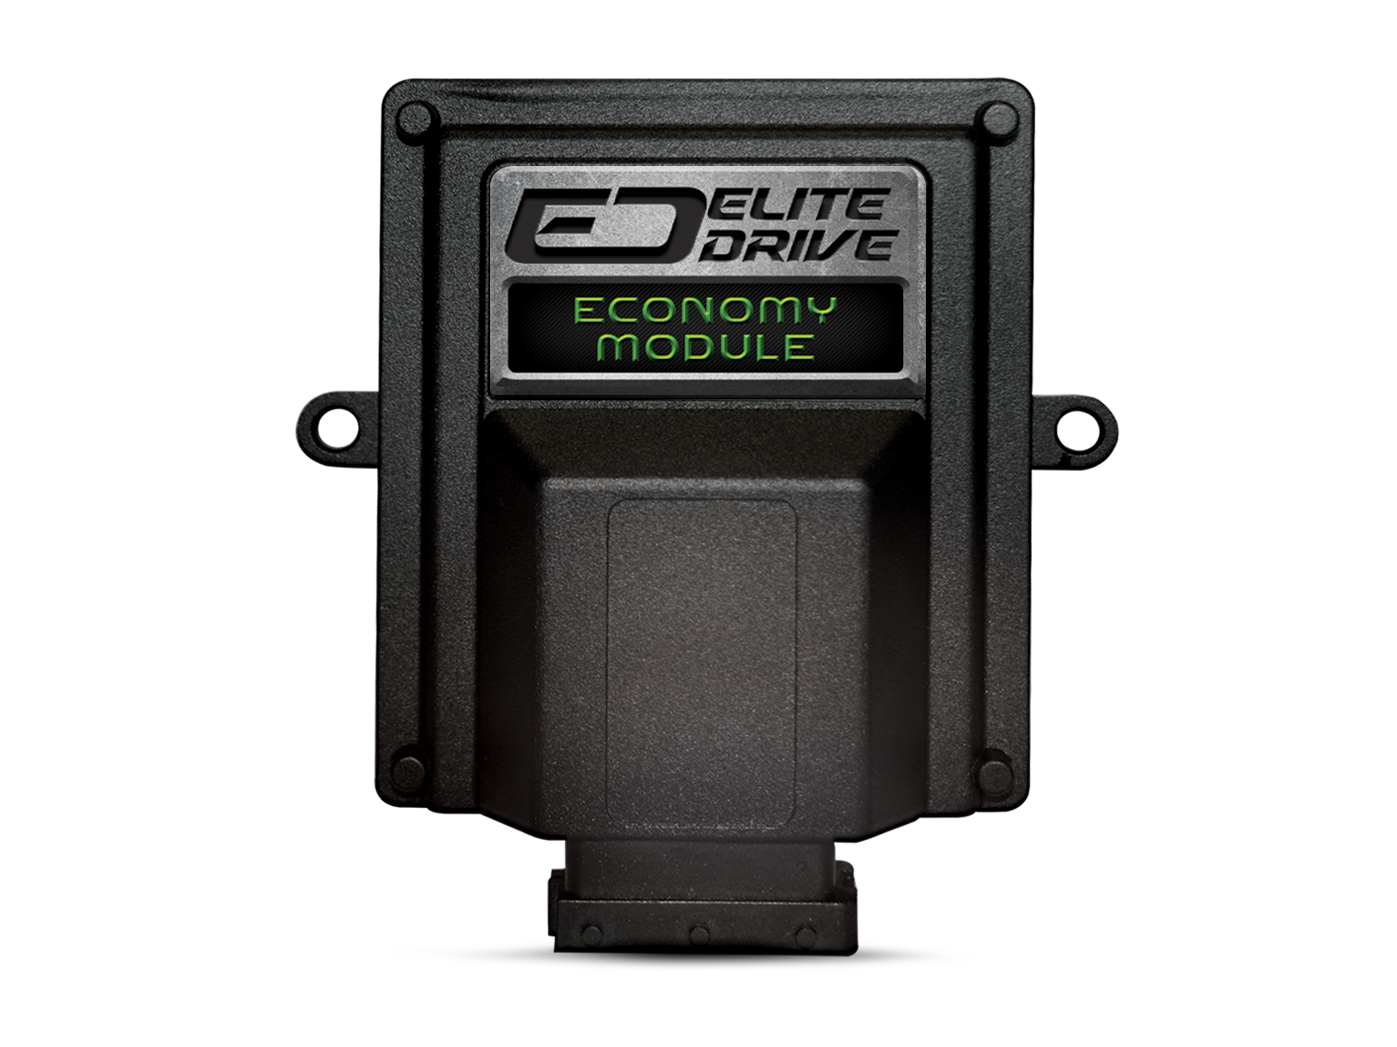 EliteDrive Diesel Economy Power Module suits LDV G10 